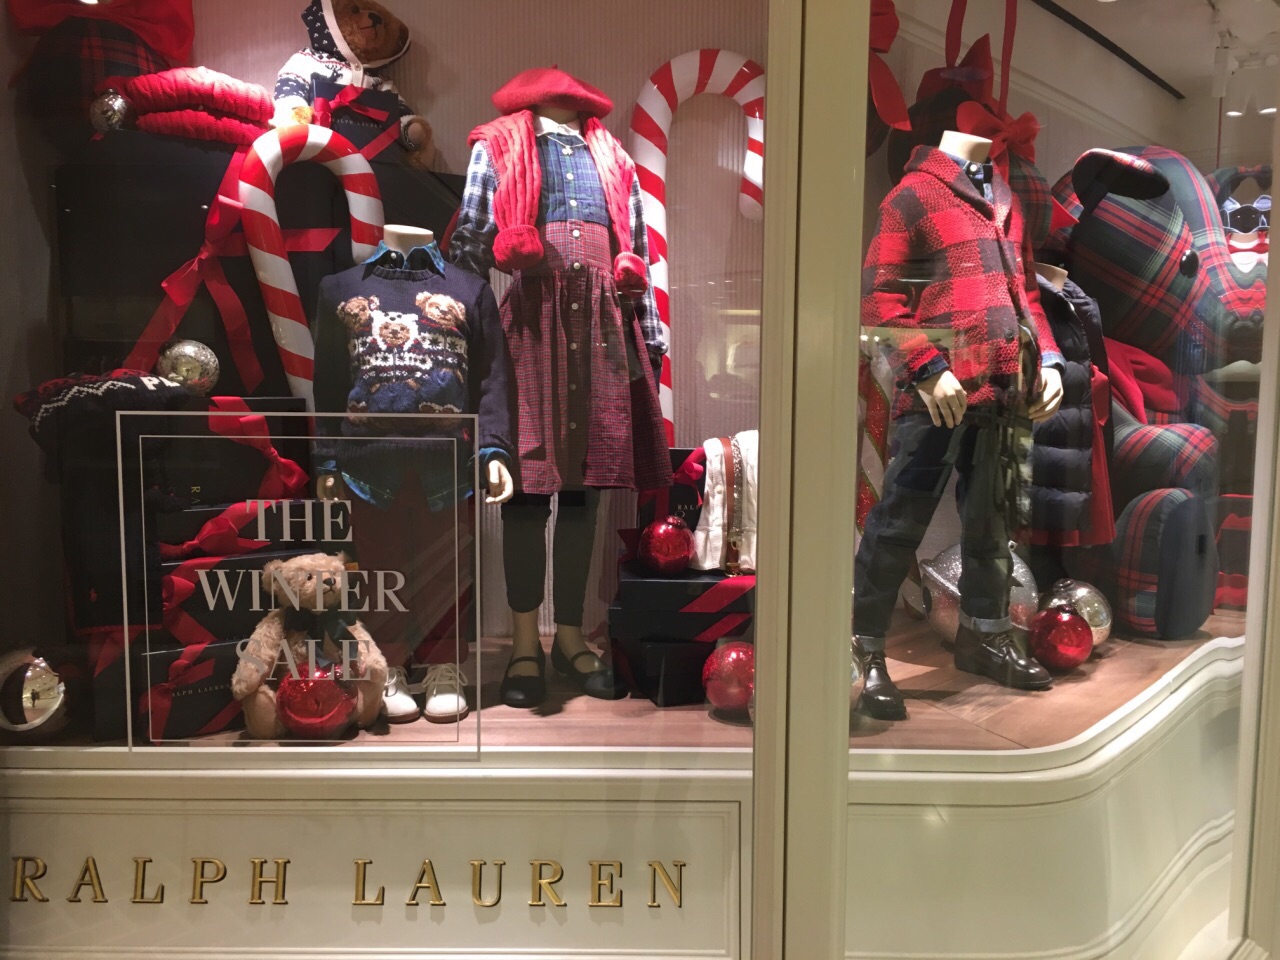 Ralph Lauren Childrenswear(Prince Building) - Hong Kong Travel  Reviews｜Trip.com Travel Guide